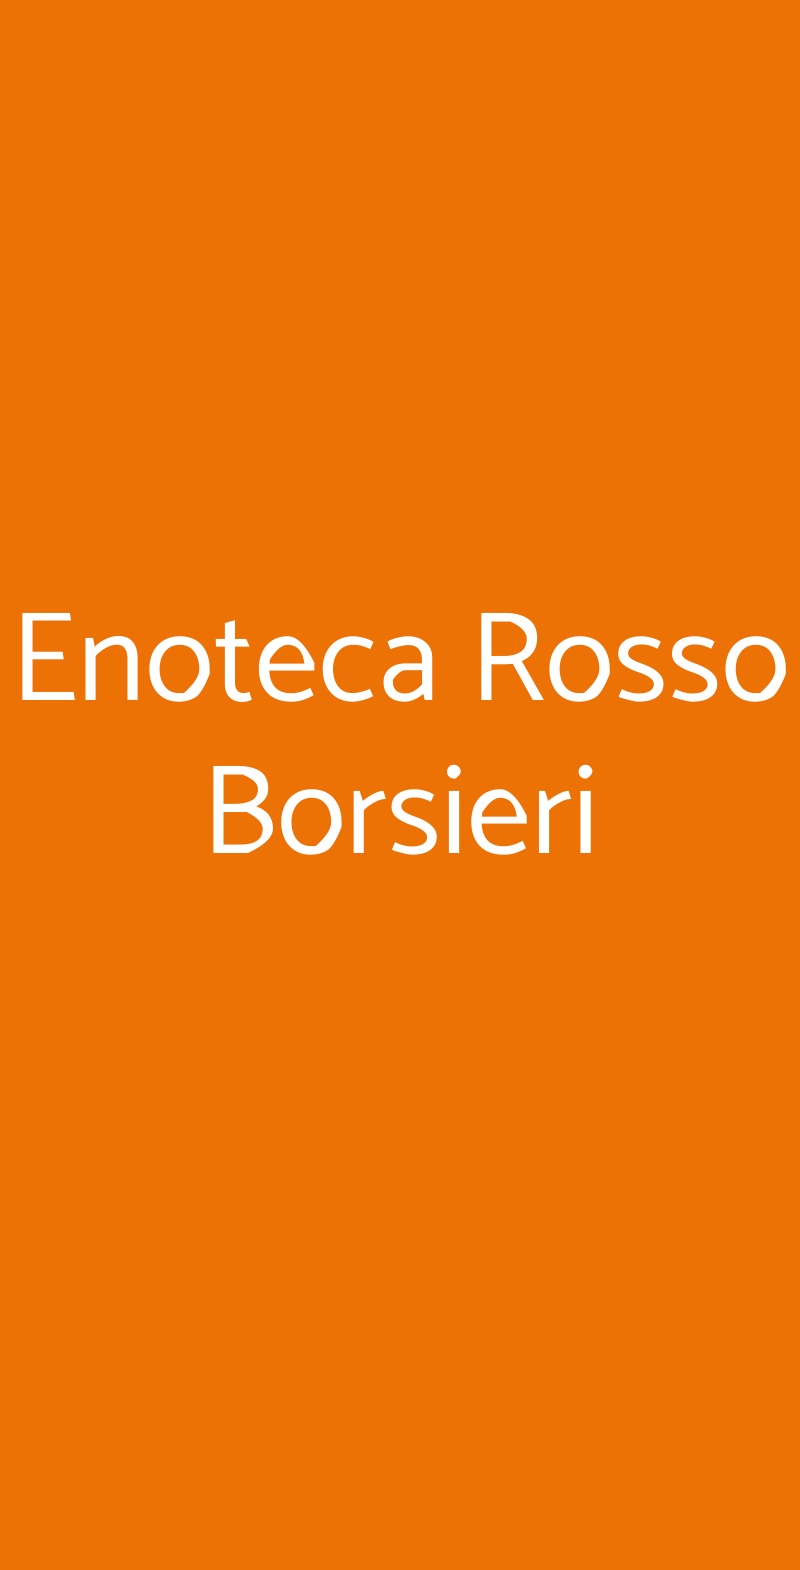 Enoteca Rosso Borsieri Milano menù 1 pagina